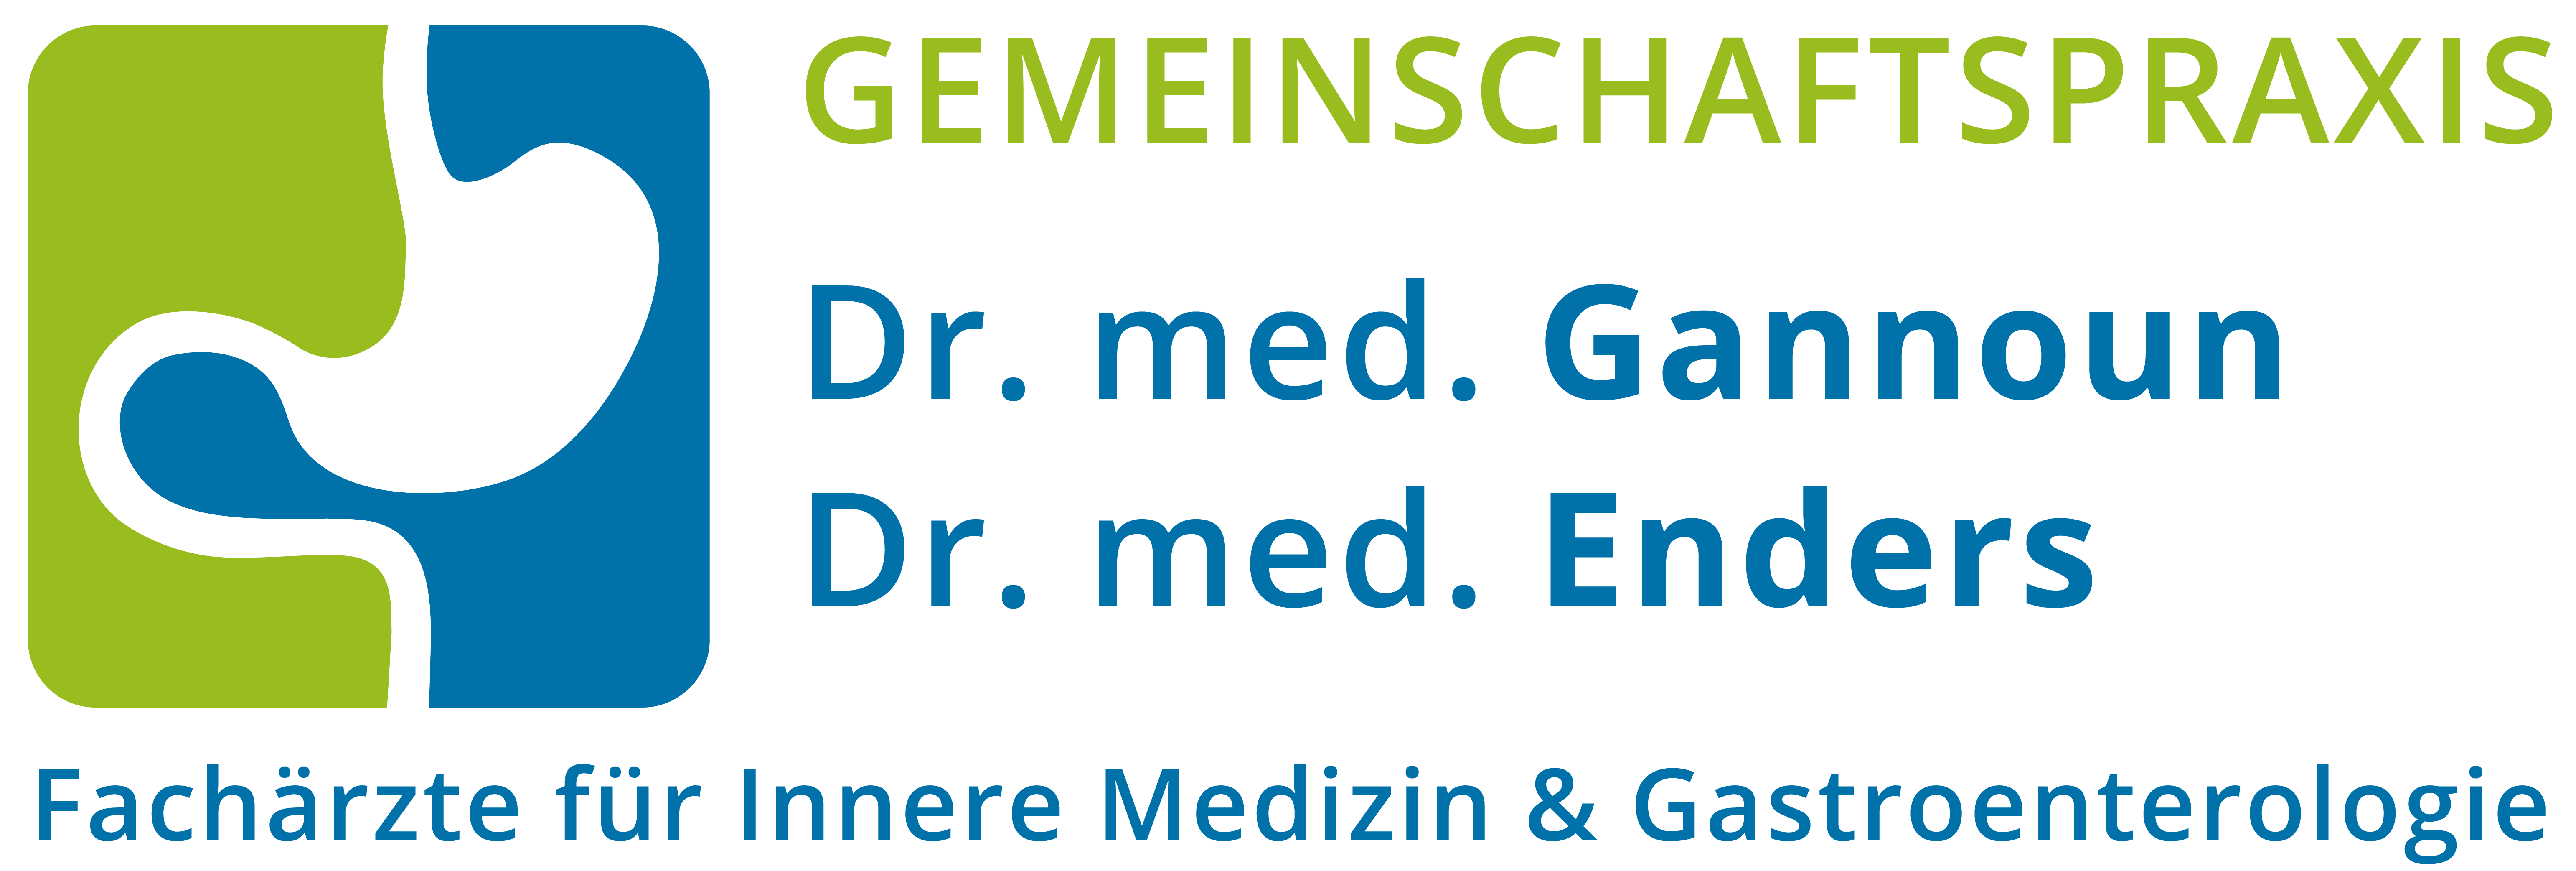 Gastropraxis Gelsenkirchen